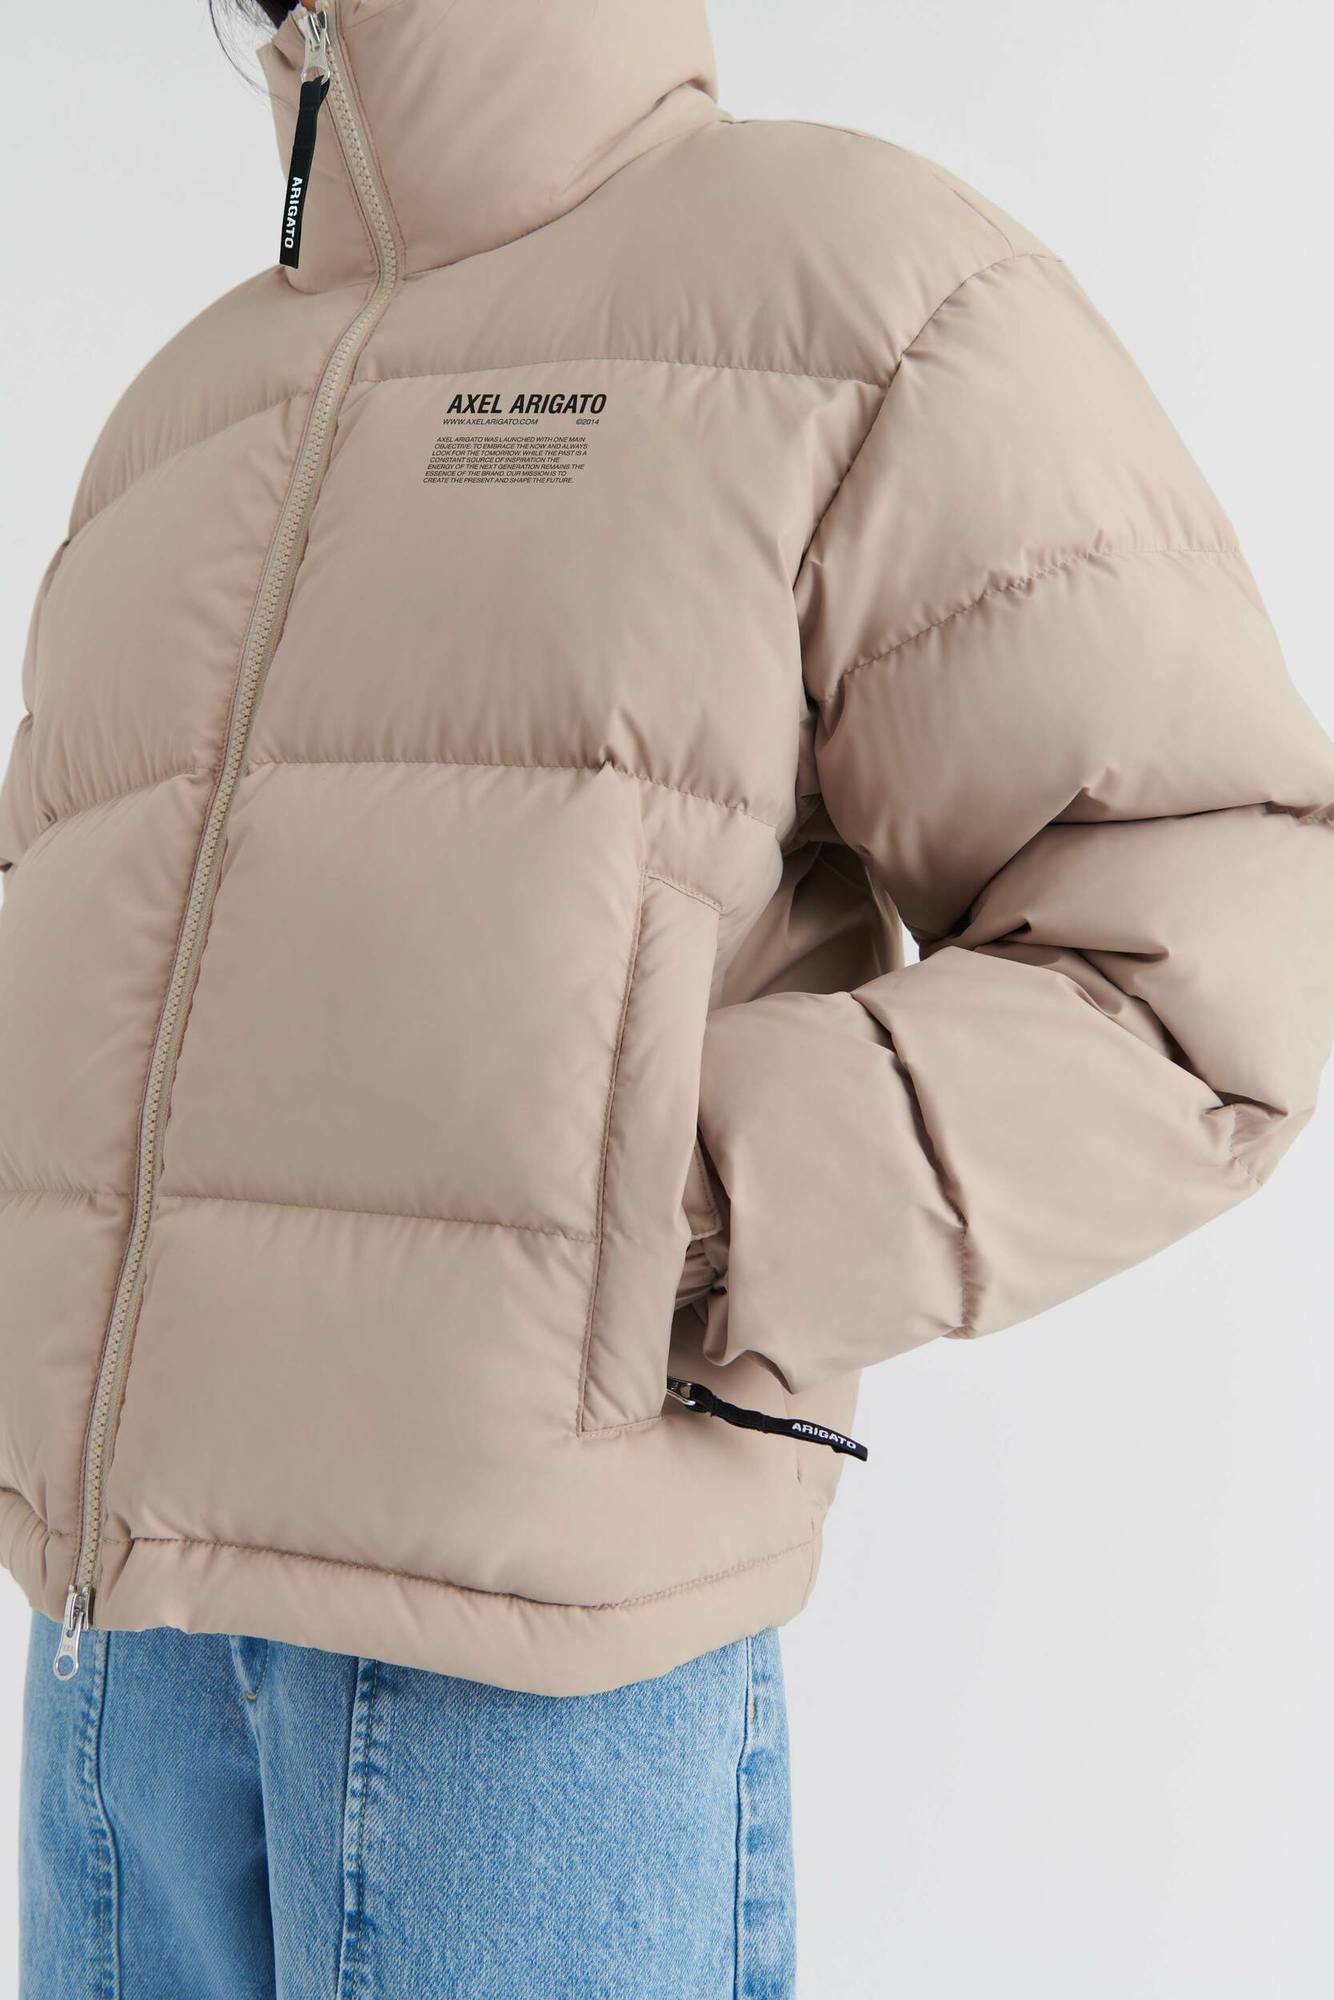 AXEL ARIGATO Observer Puffer Jacket in Pale Beige S